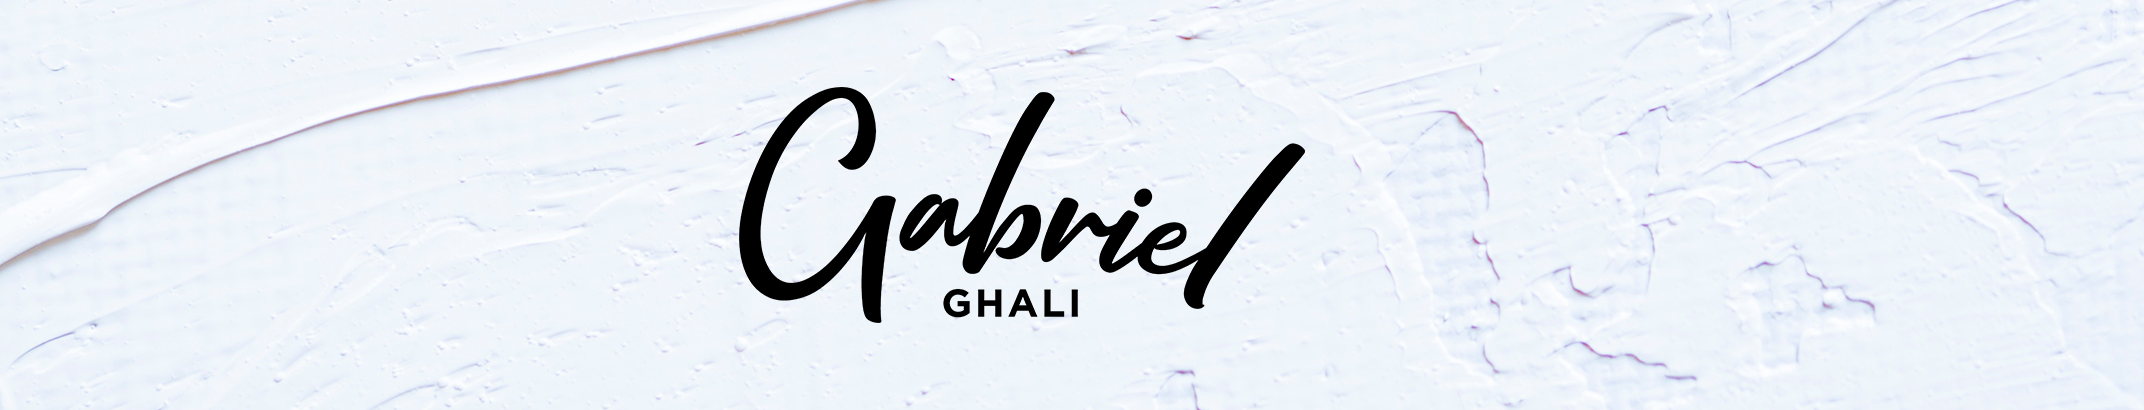 Gabriel Ghali's profile banner